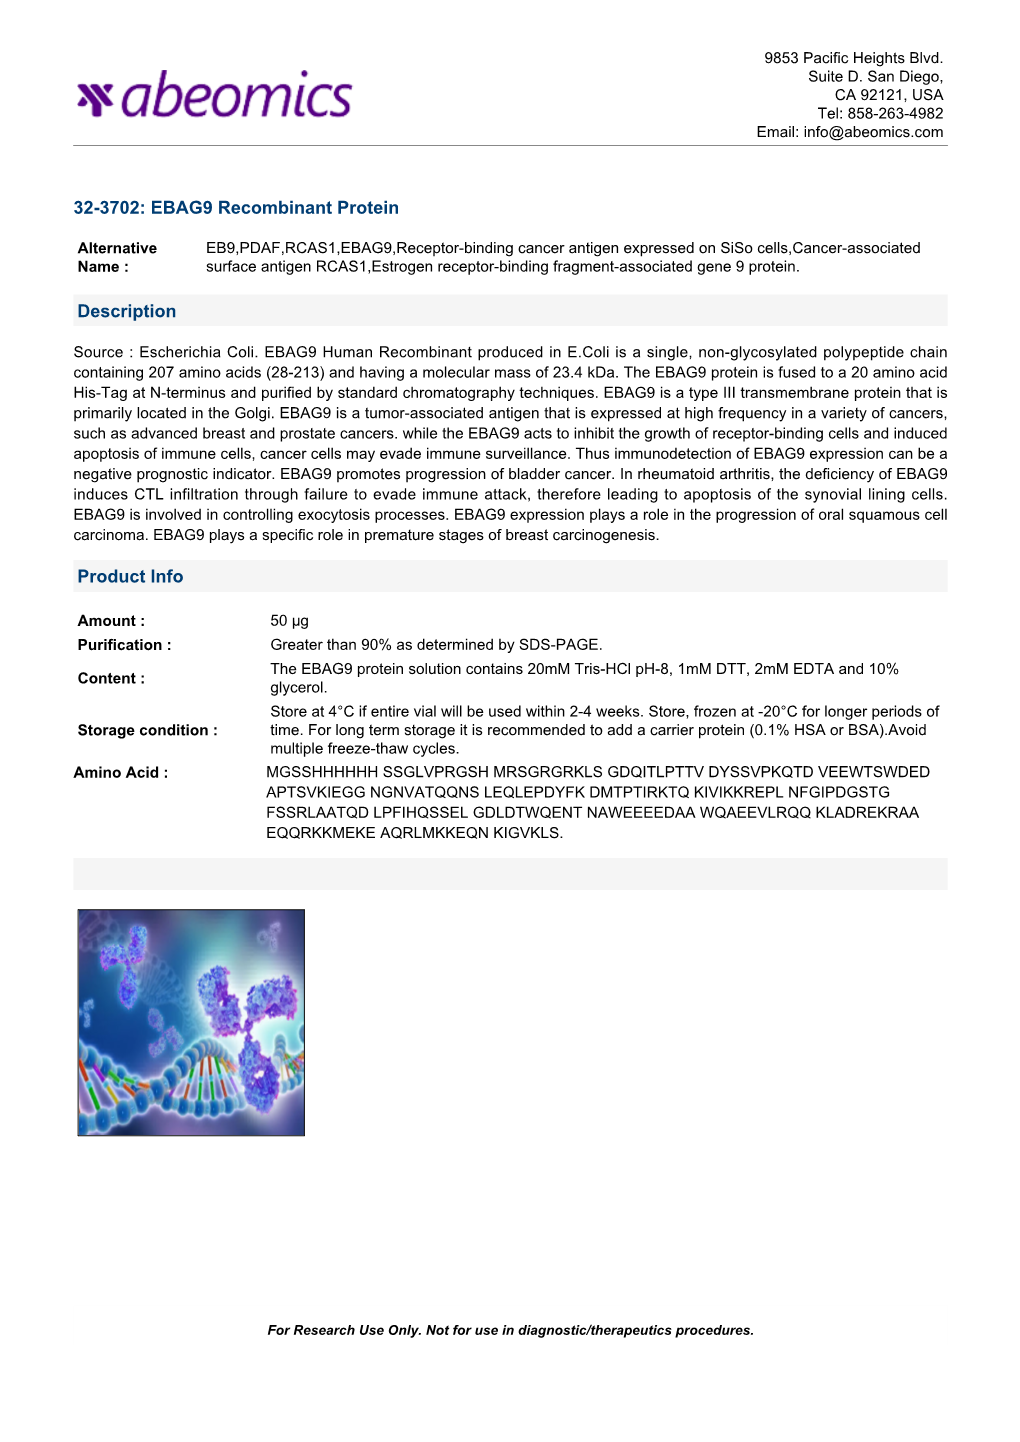 32-3702: EBAG9 Recombinant Protein Description